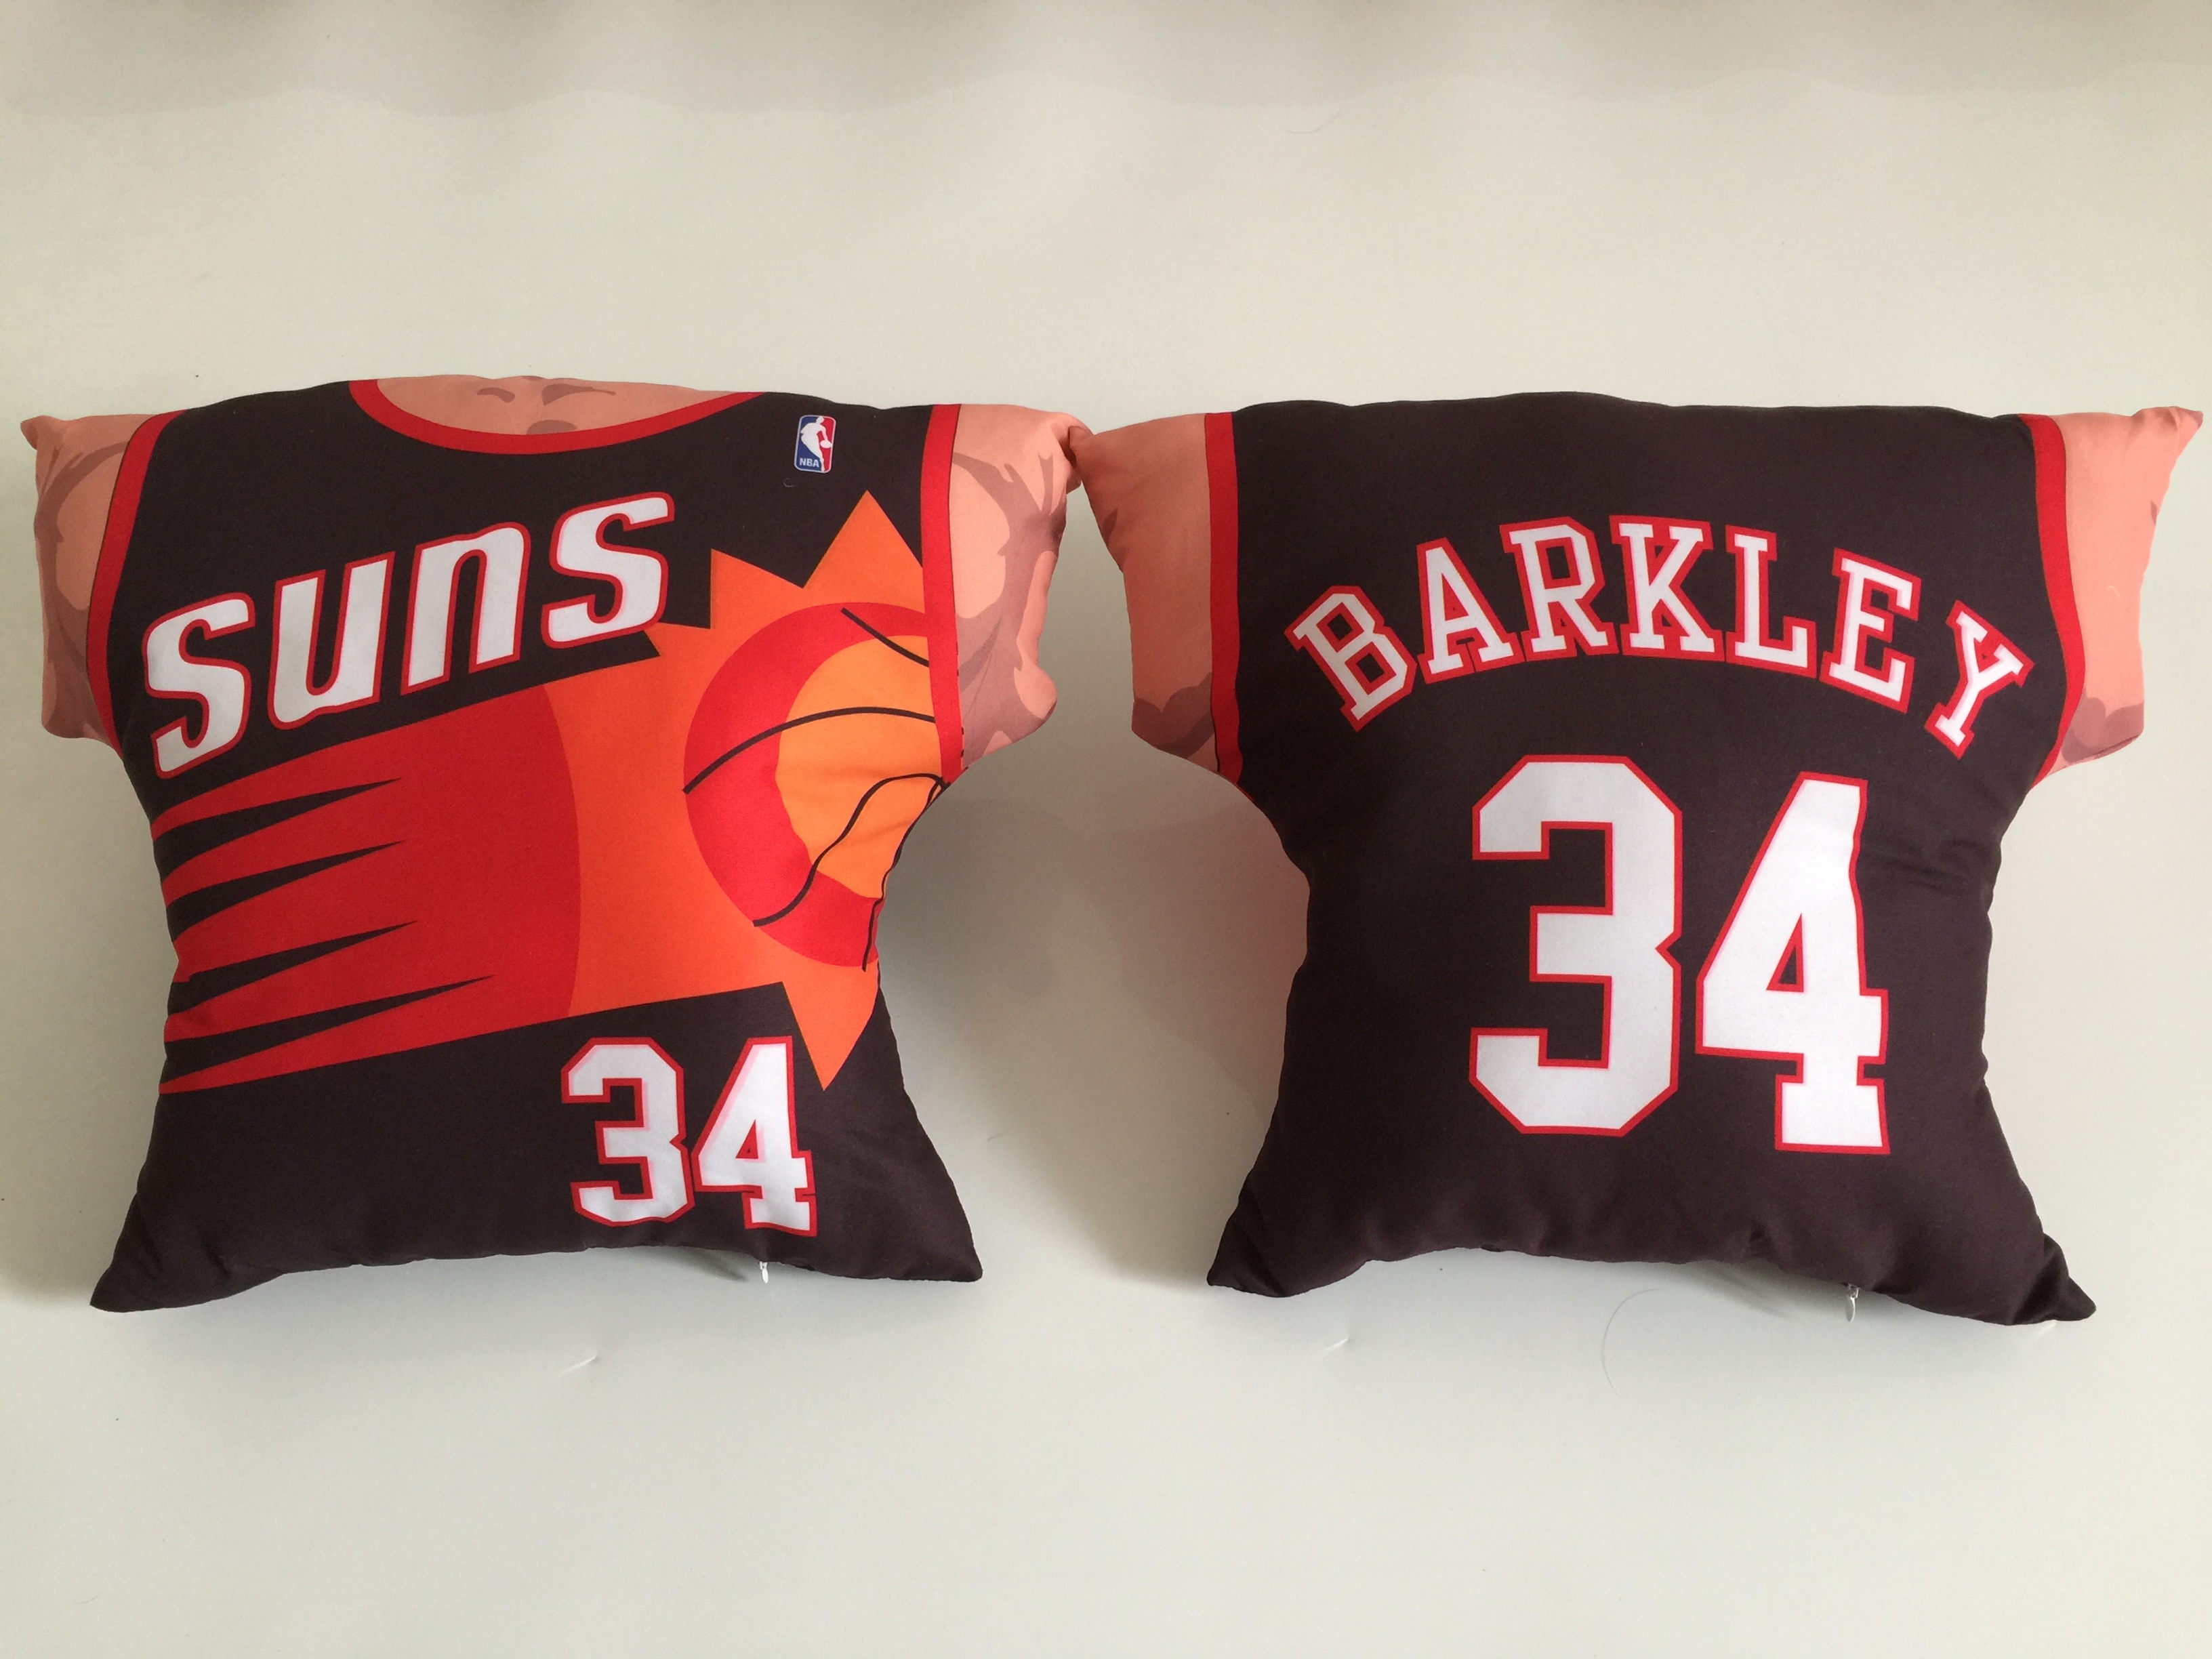 Phoenix Suns 34 Charles Barkley Black NBA Pillow